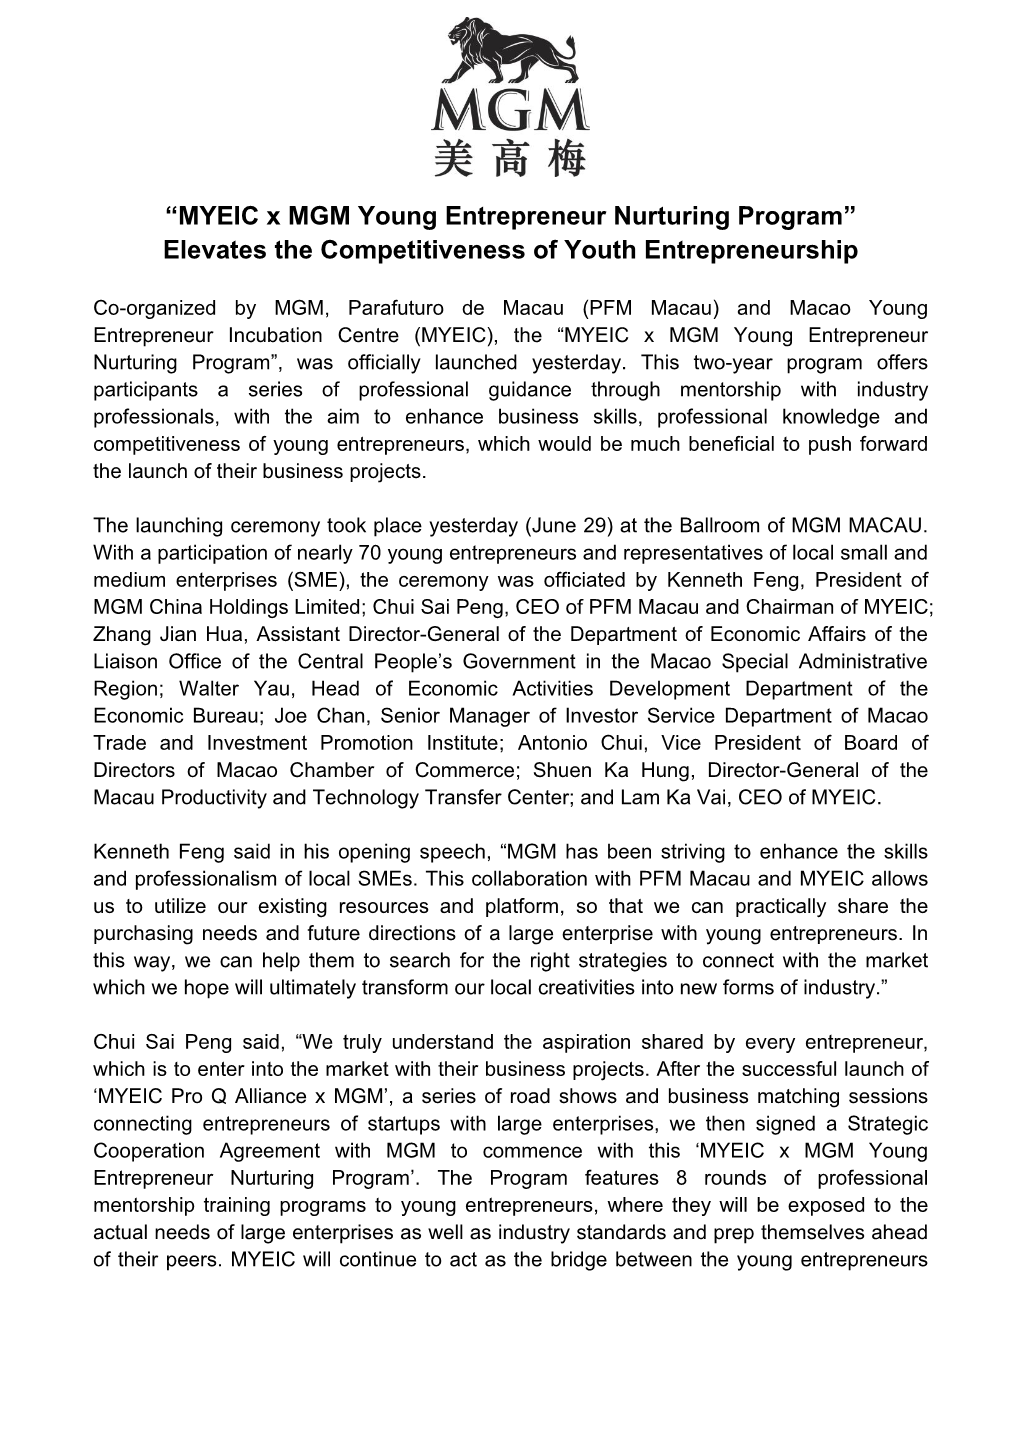 MYEIC X MGM Young Entrepreneur Nurturing Program” Elevates the Competitiveness of Youth Entrepreneurship